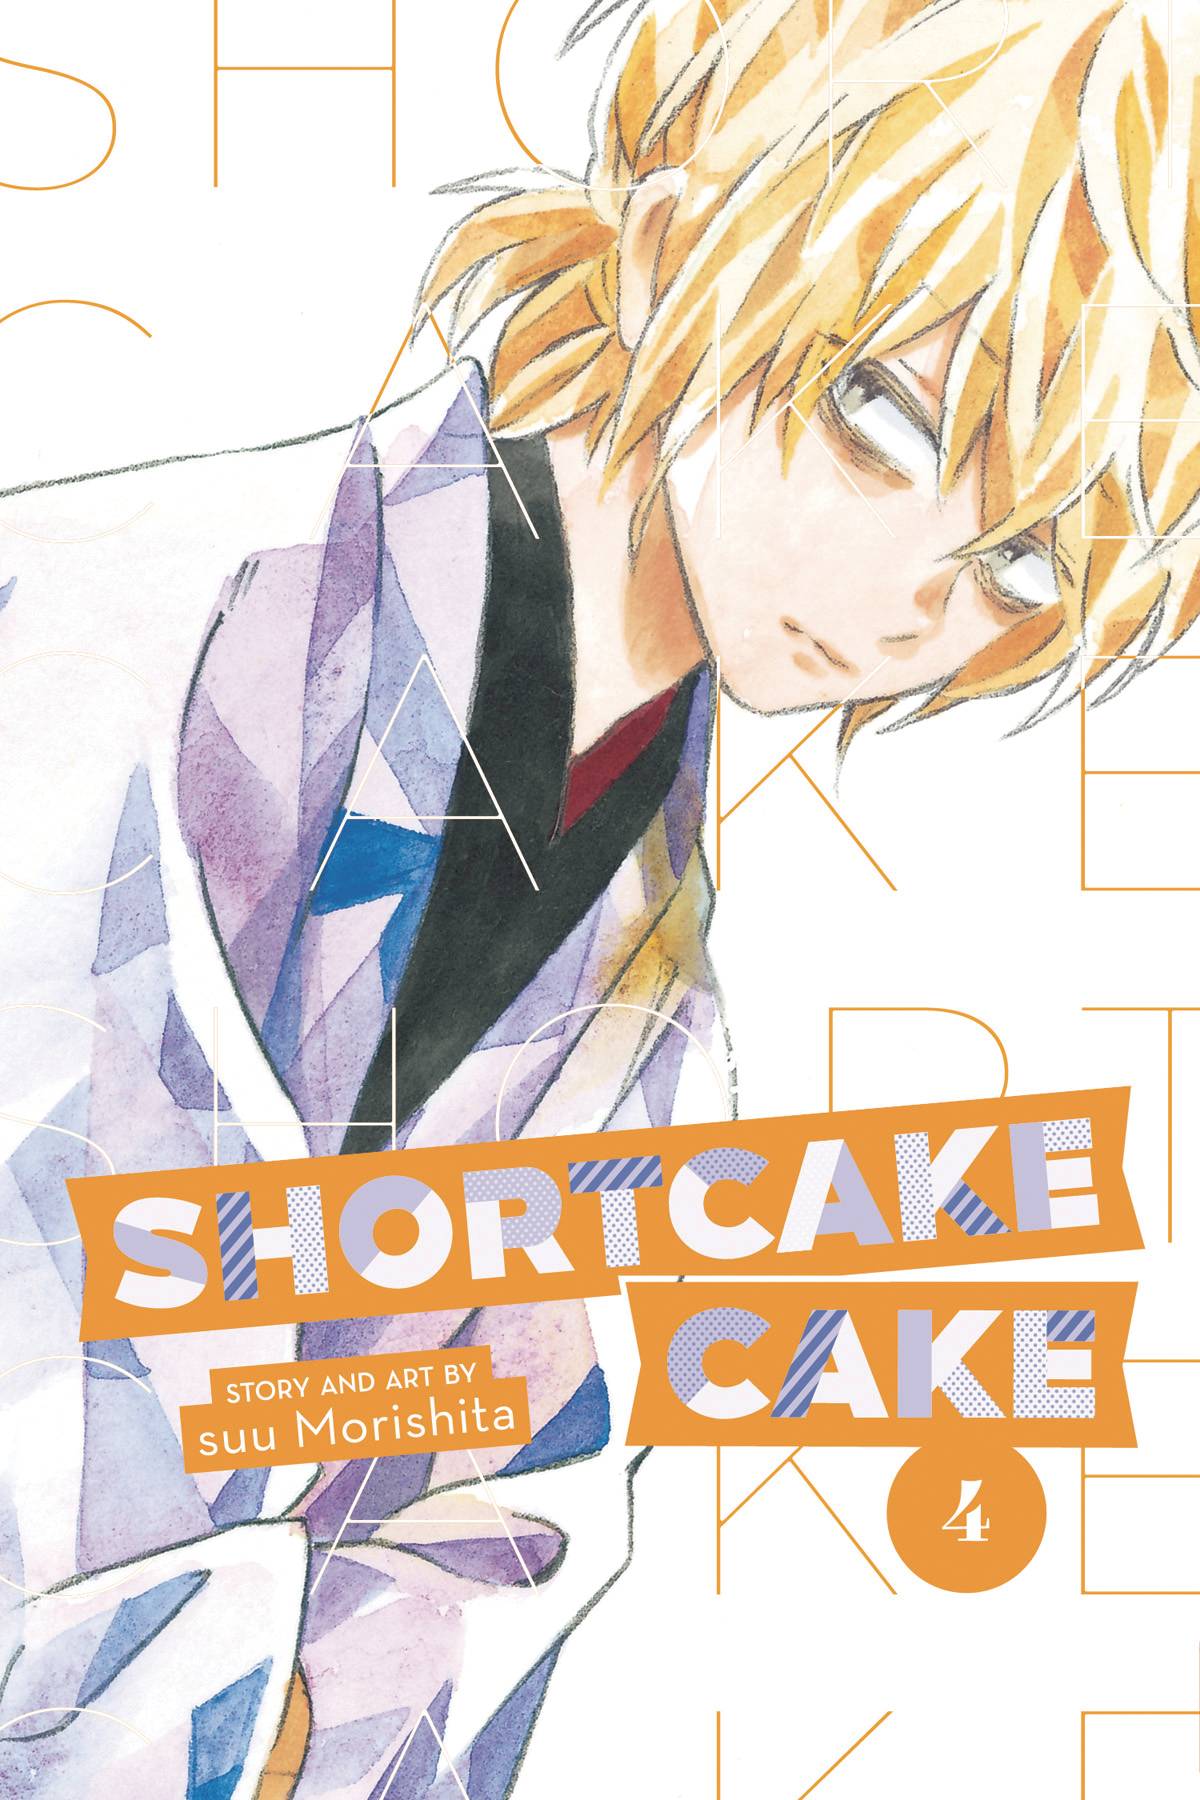 Shortcake Cake Manga Volume 4